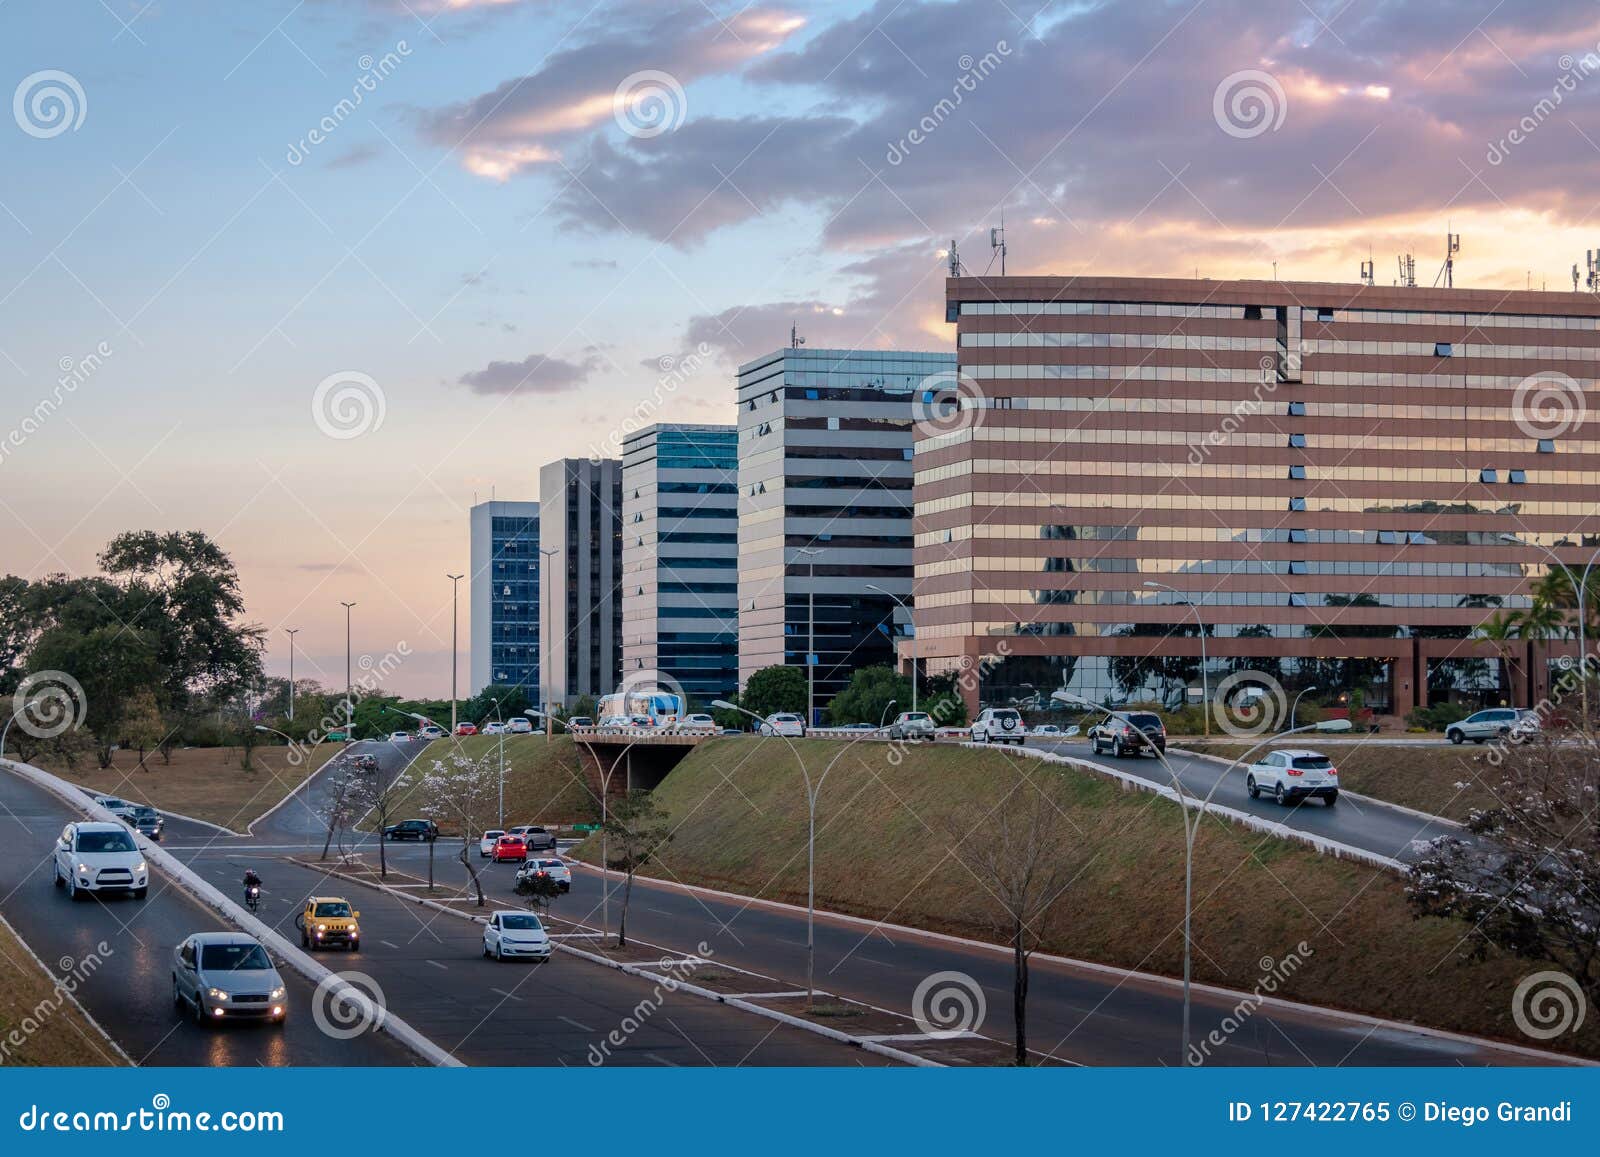 brasilia buildings at sunset - brasilia, distrito federal, brazil